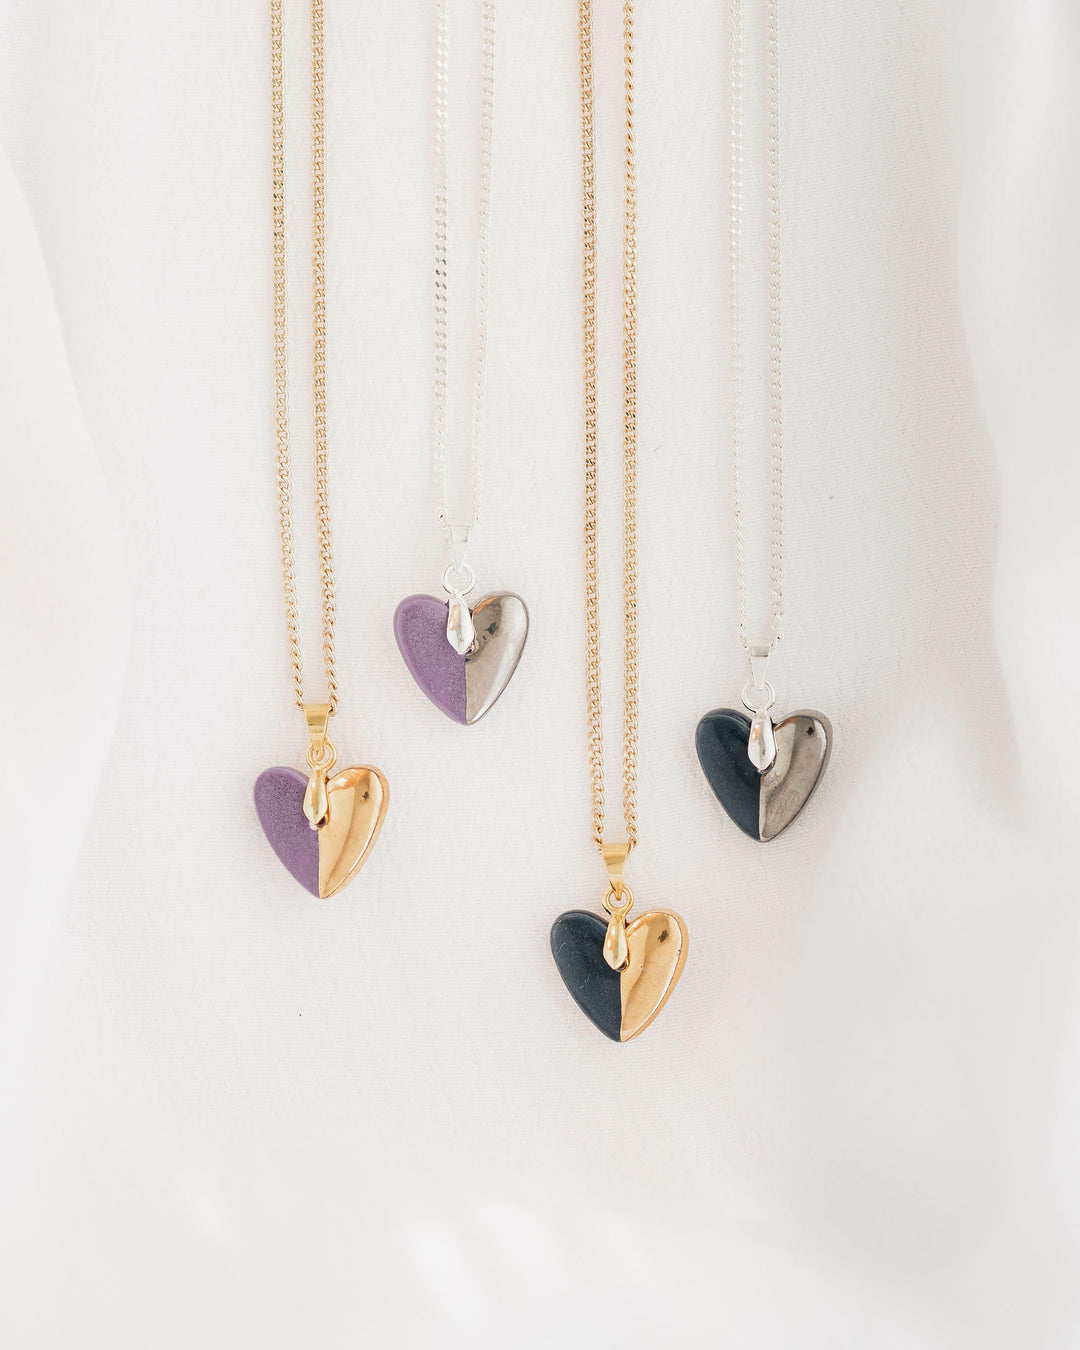 *New* Blue or Purple Heart shape Ceramic pendant necklace